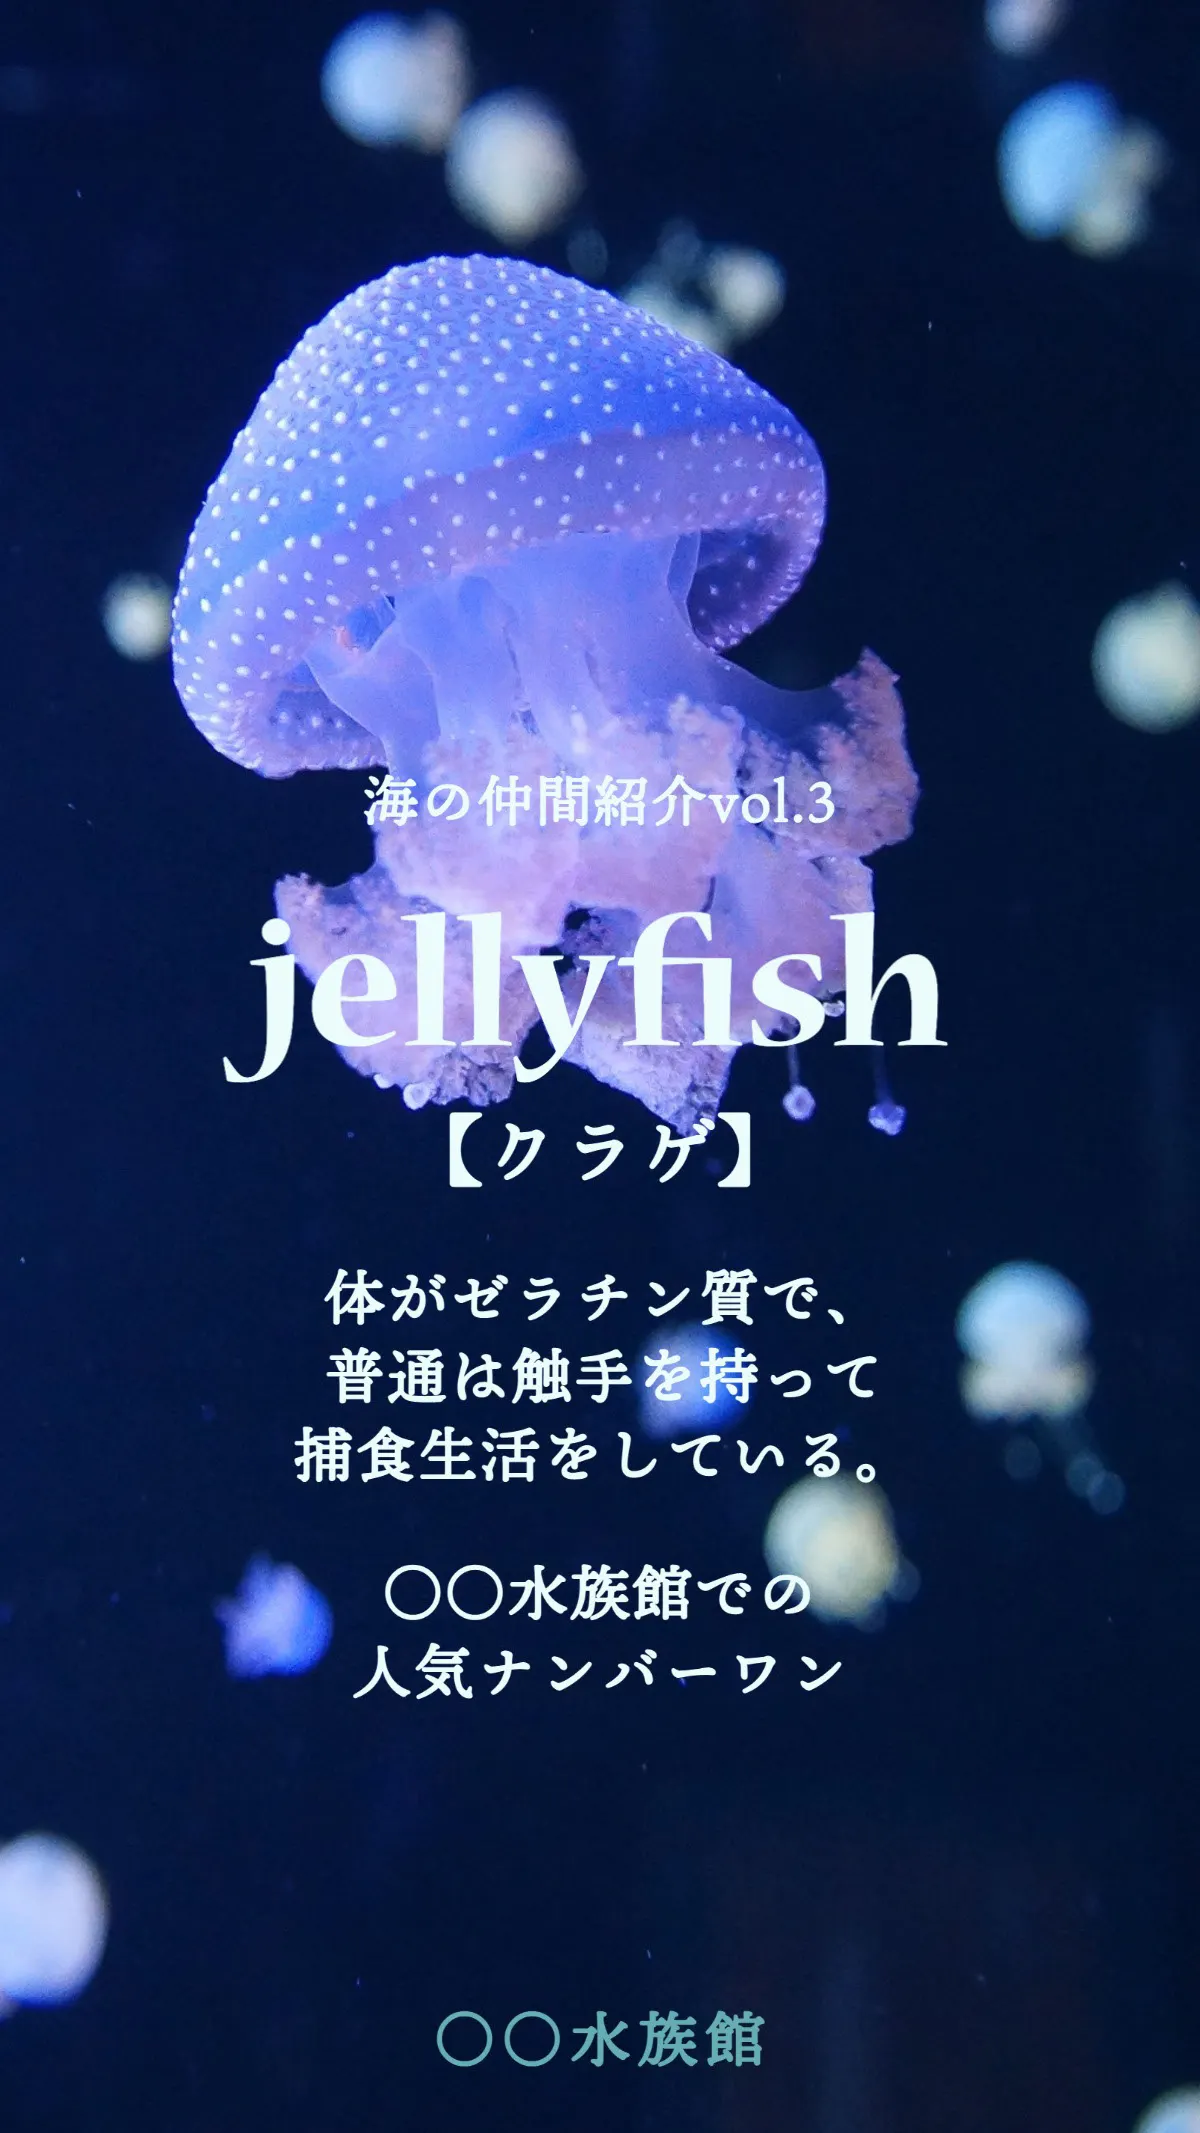 Aquarium jelly fish facebook story